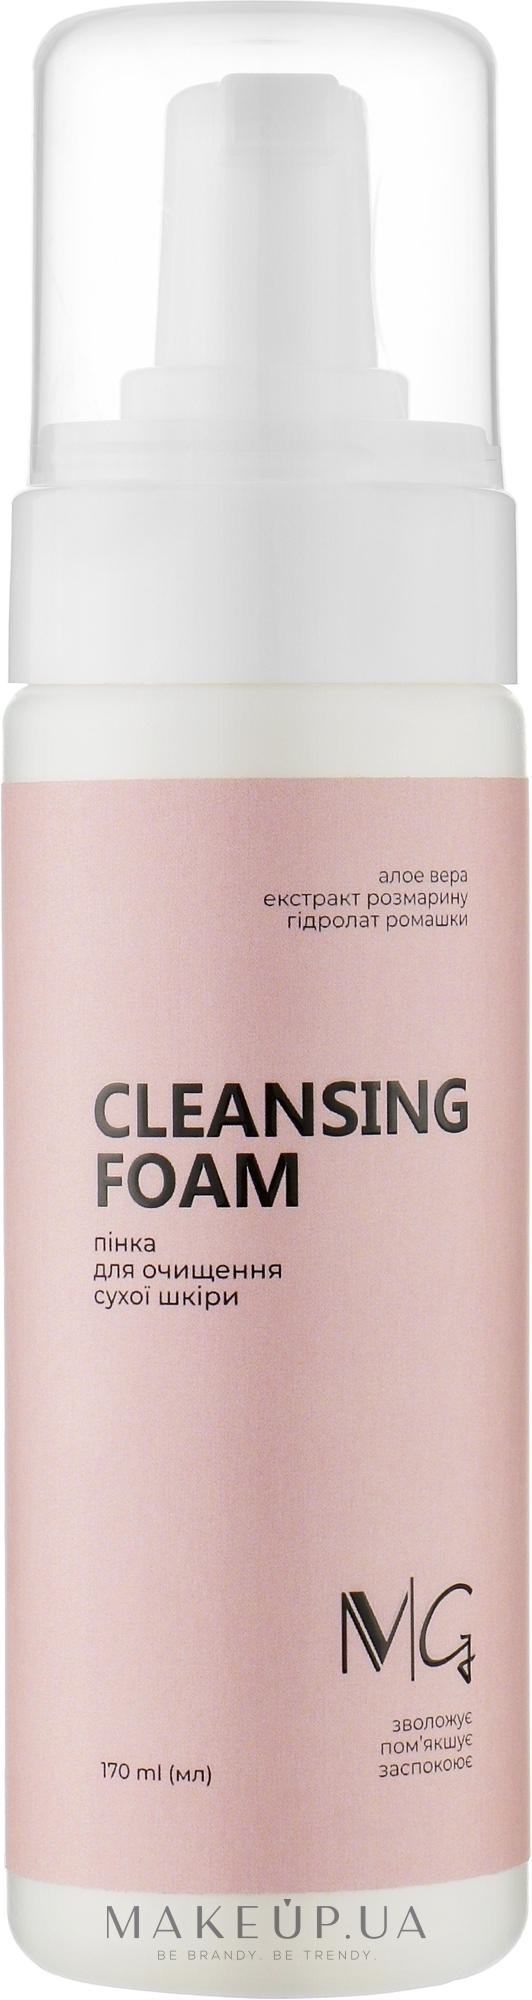 Пенка для очищения сухой кожи - MG Spa Cleansing Foam — фото 170ml